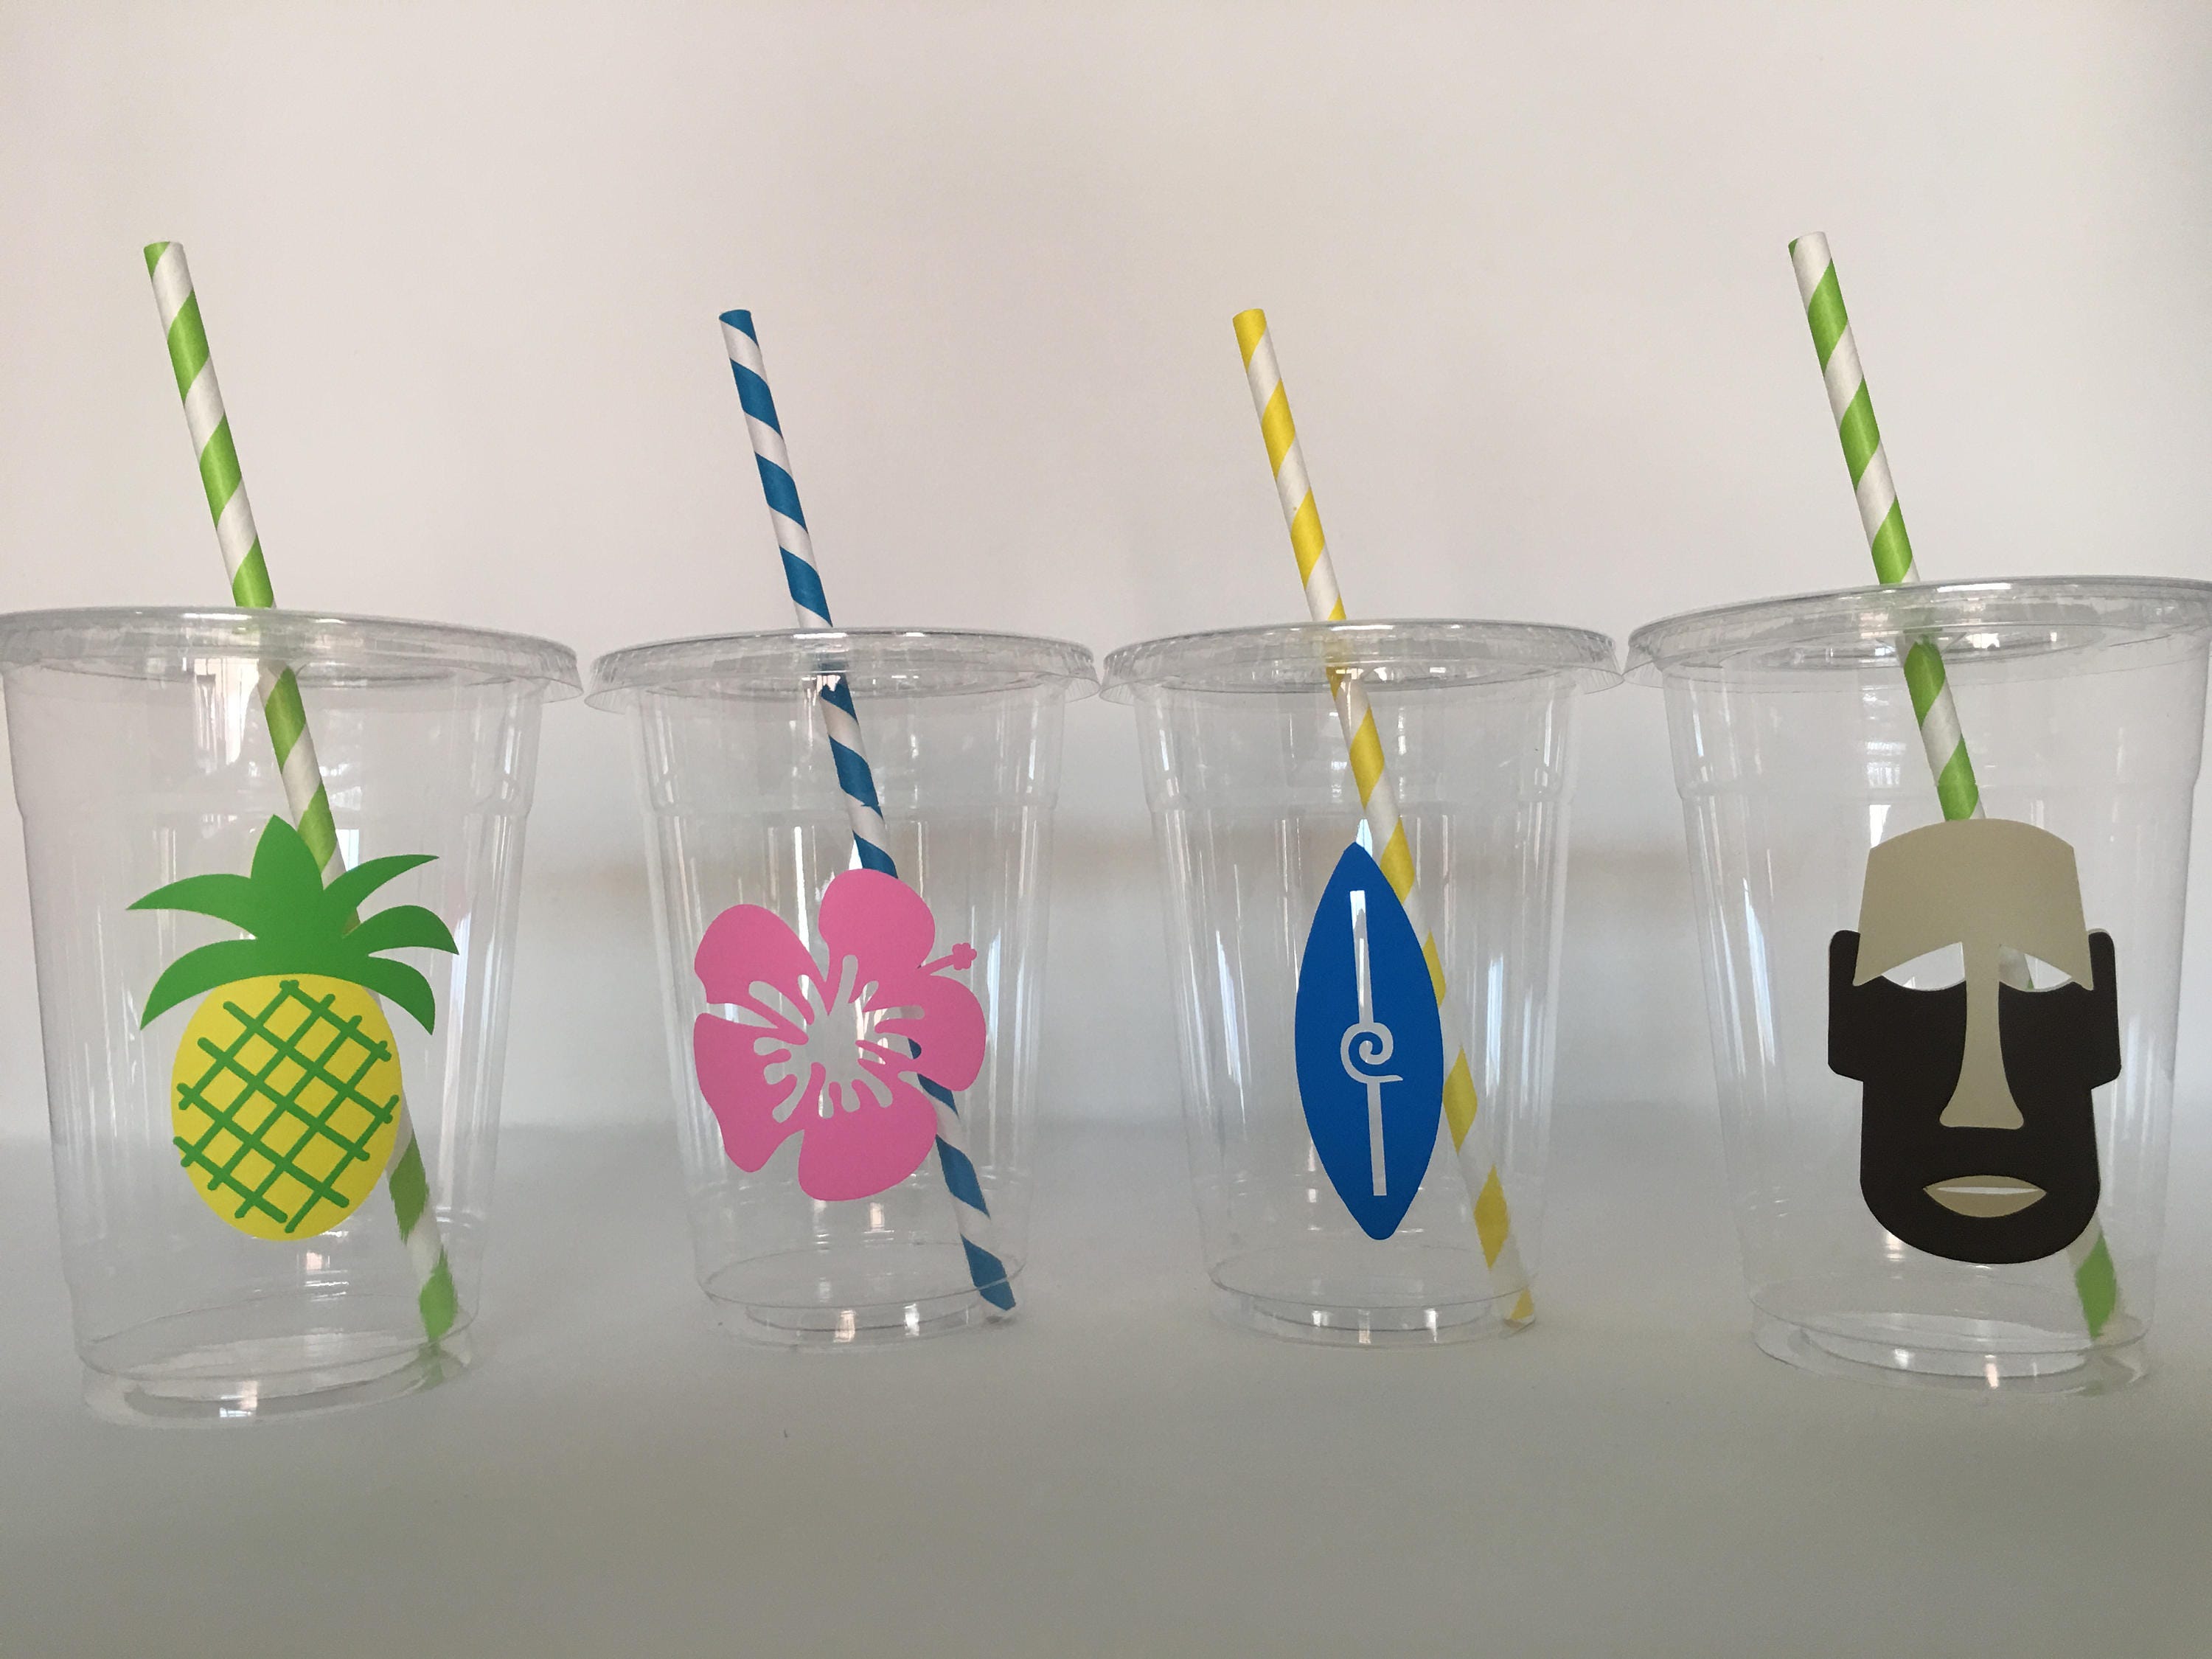 Fabulous Pineapple Sipper Glasses w/Lids & Reusable Straws